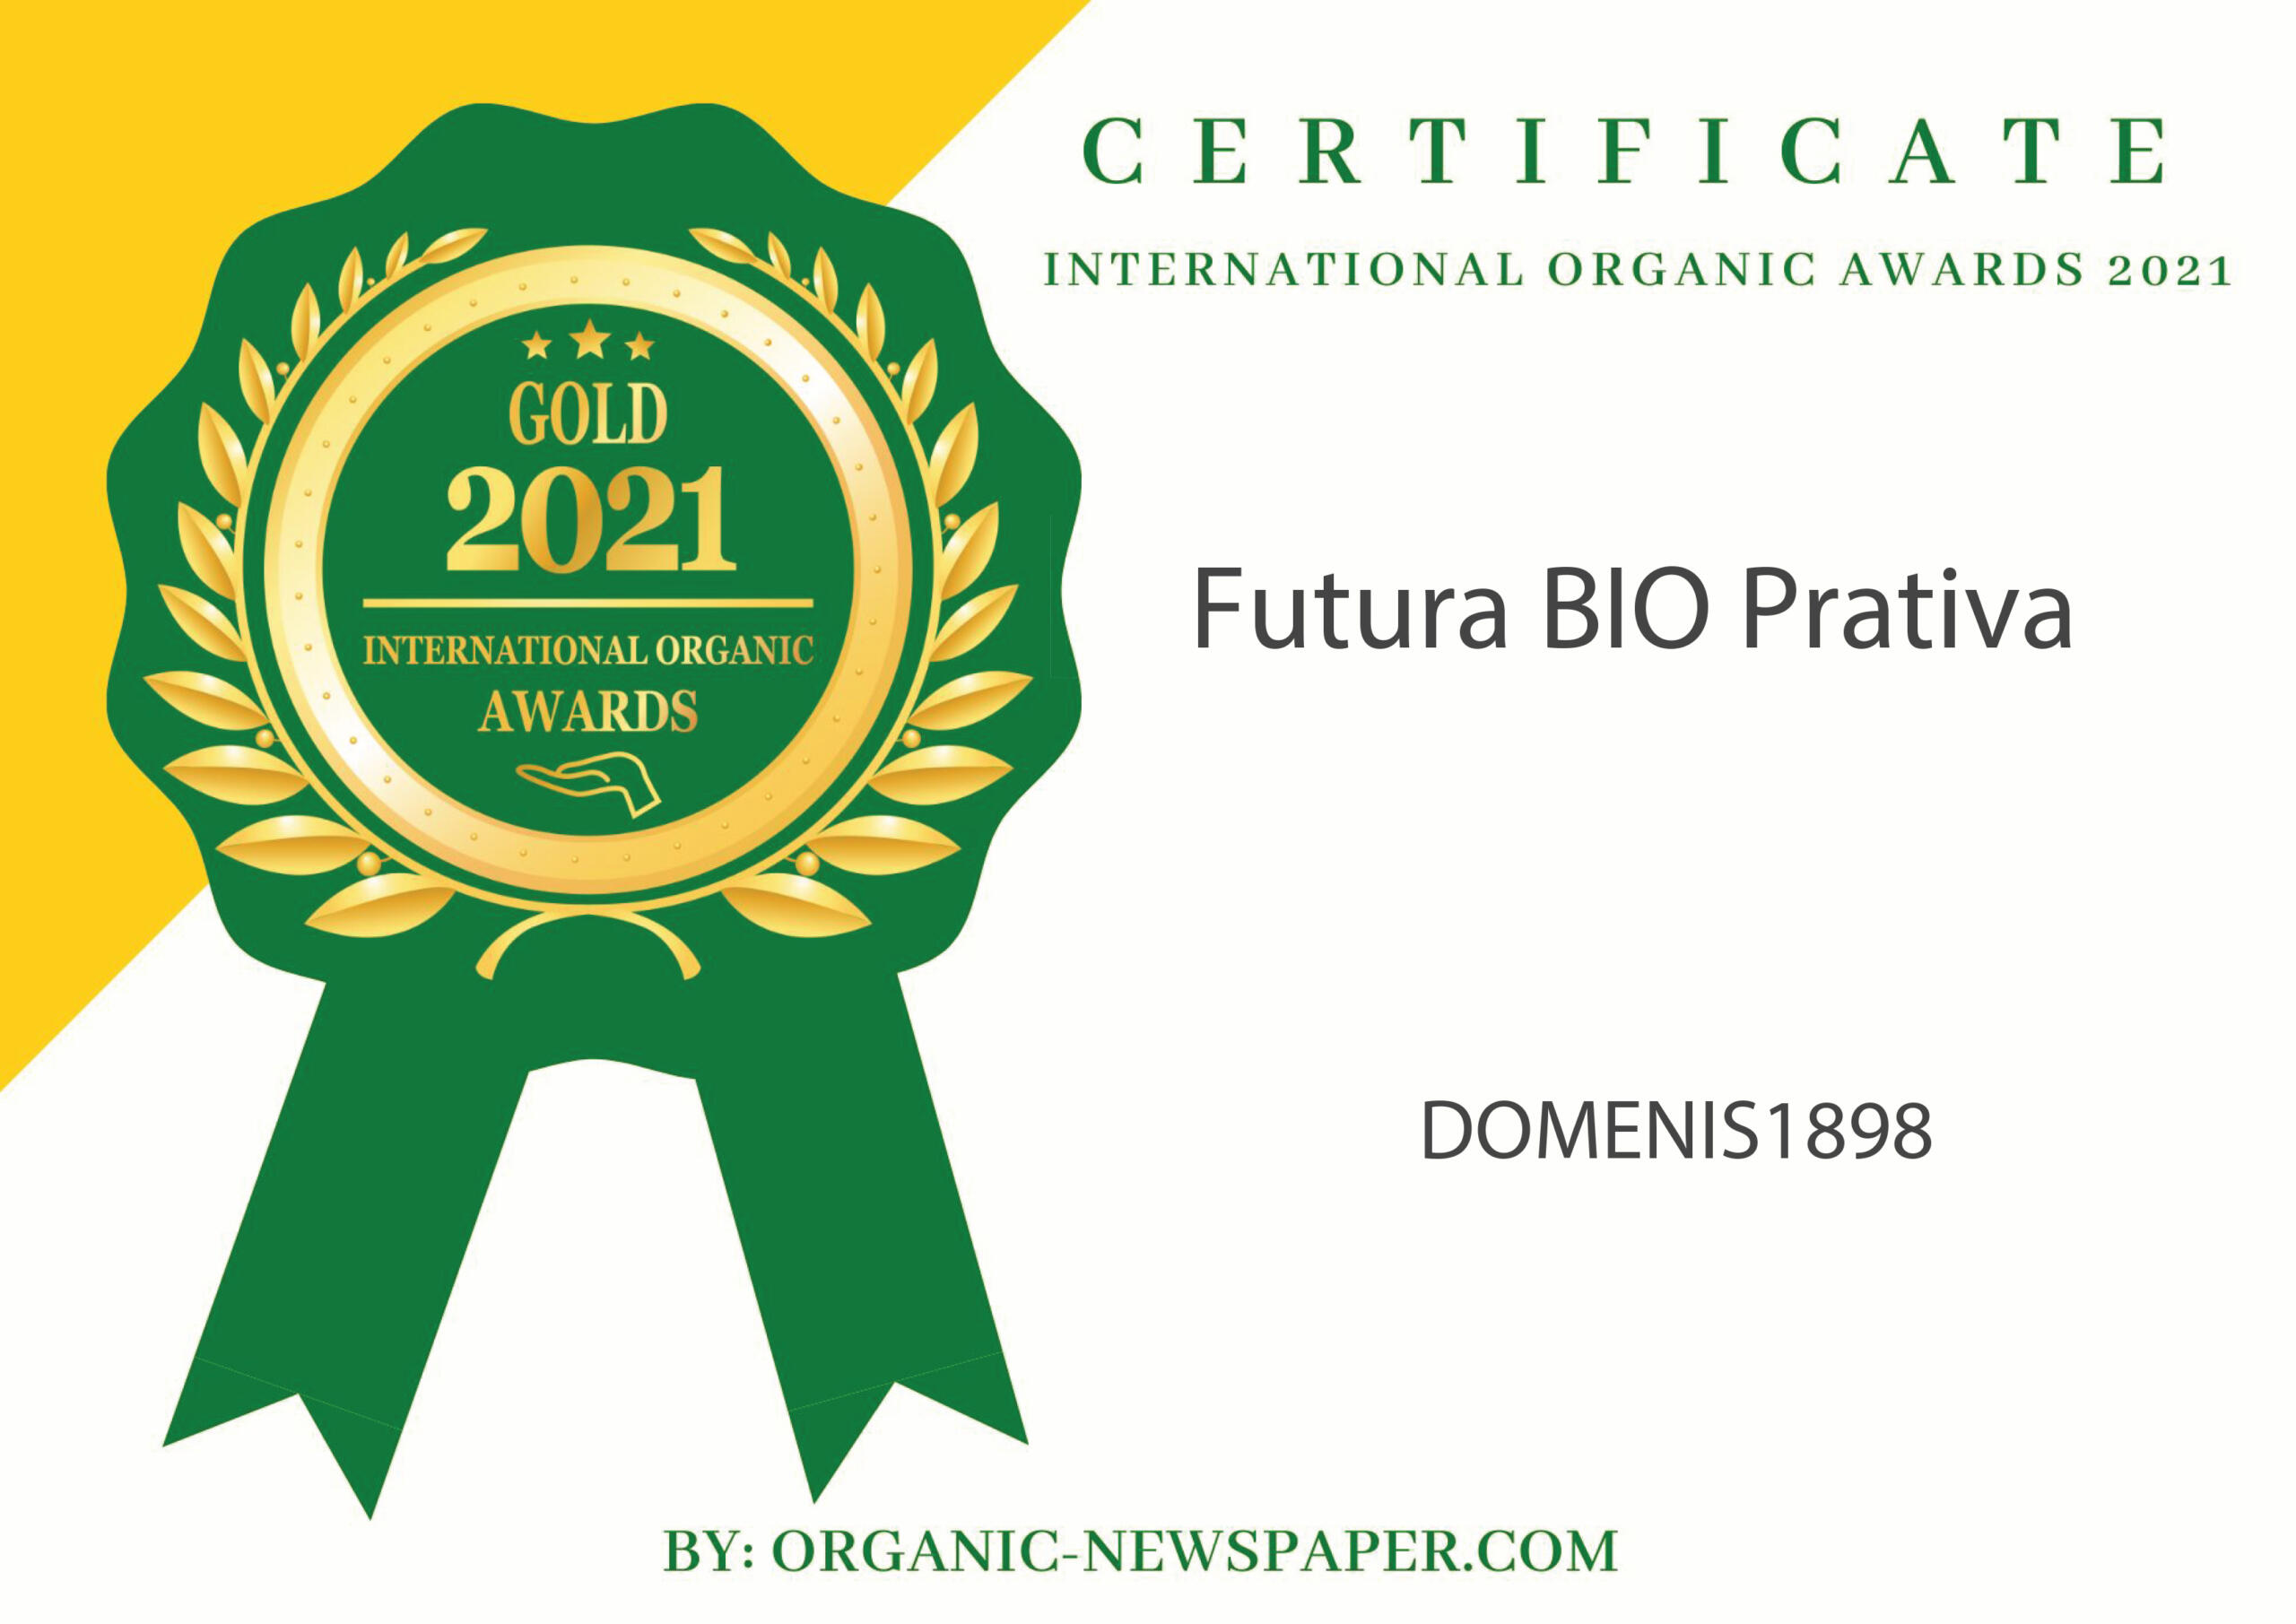 International Organic Awards 2021 – Gold Winner – Futura BIO Prativa